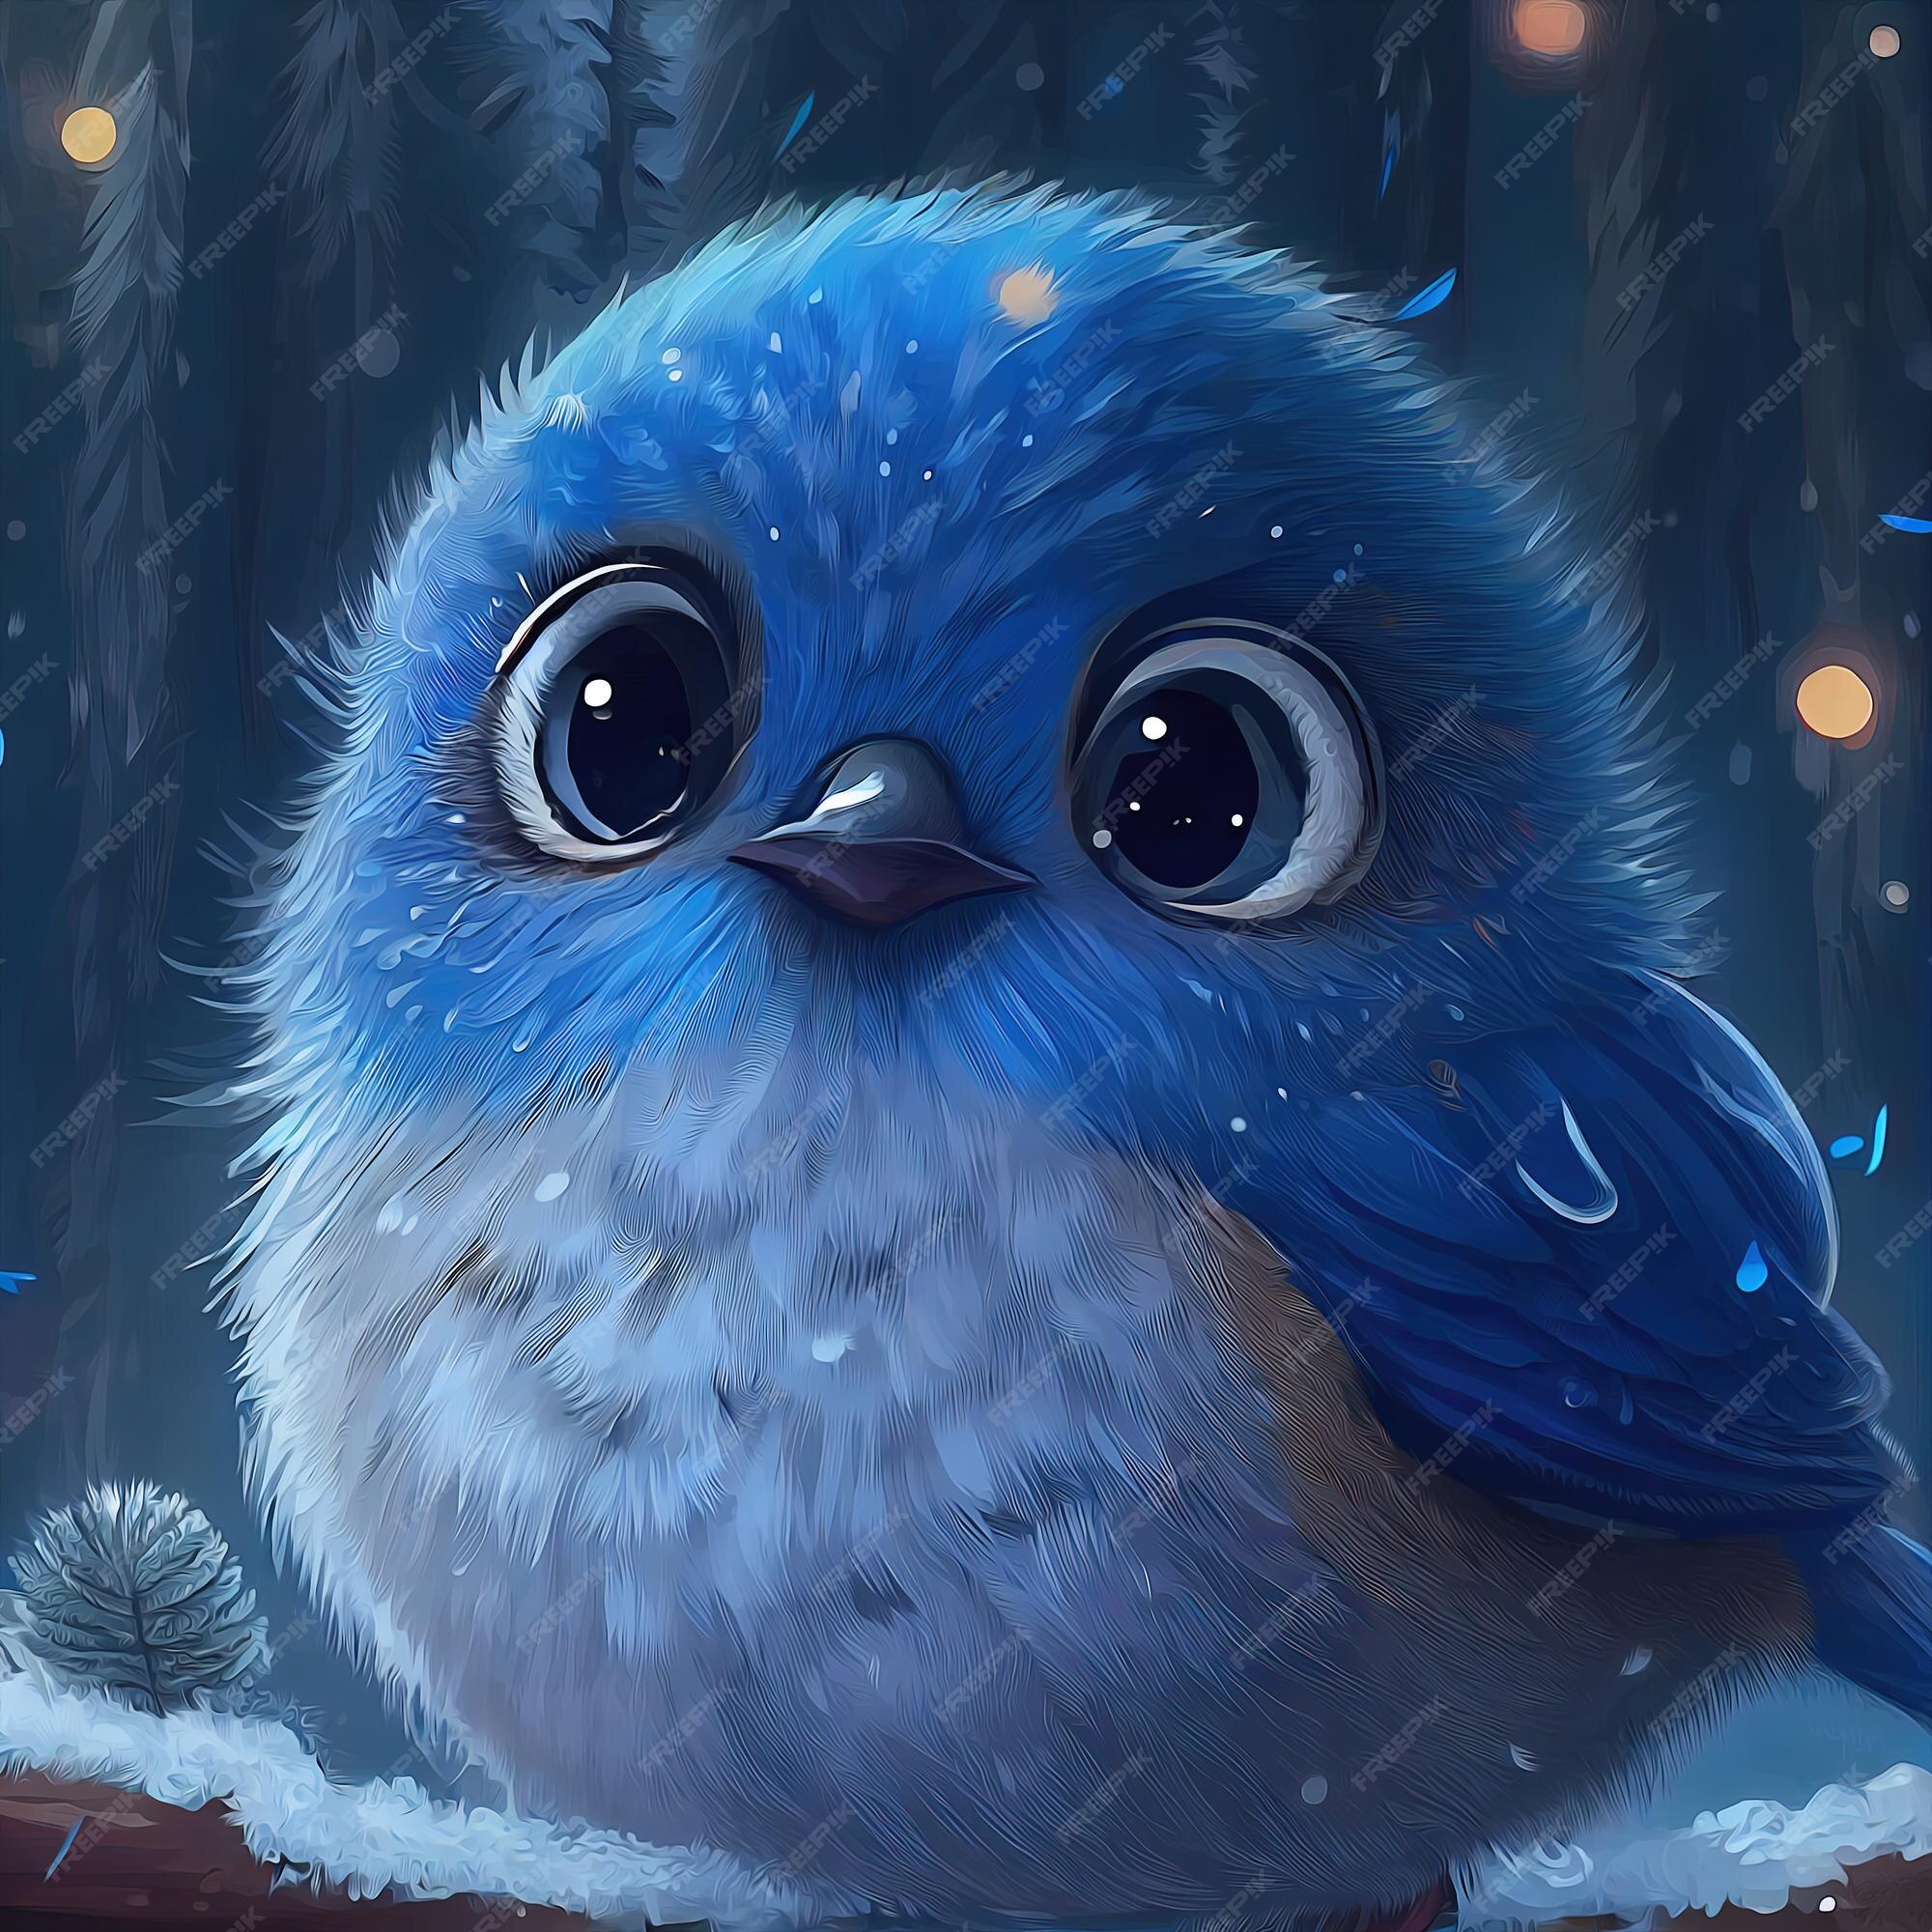 Premium Photo | Adorable blue bird in winter forest